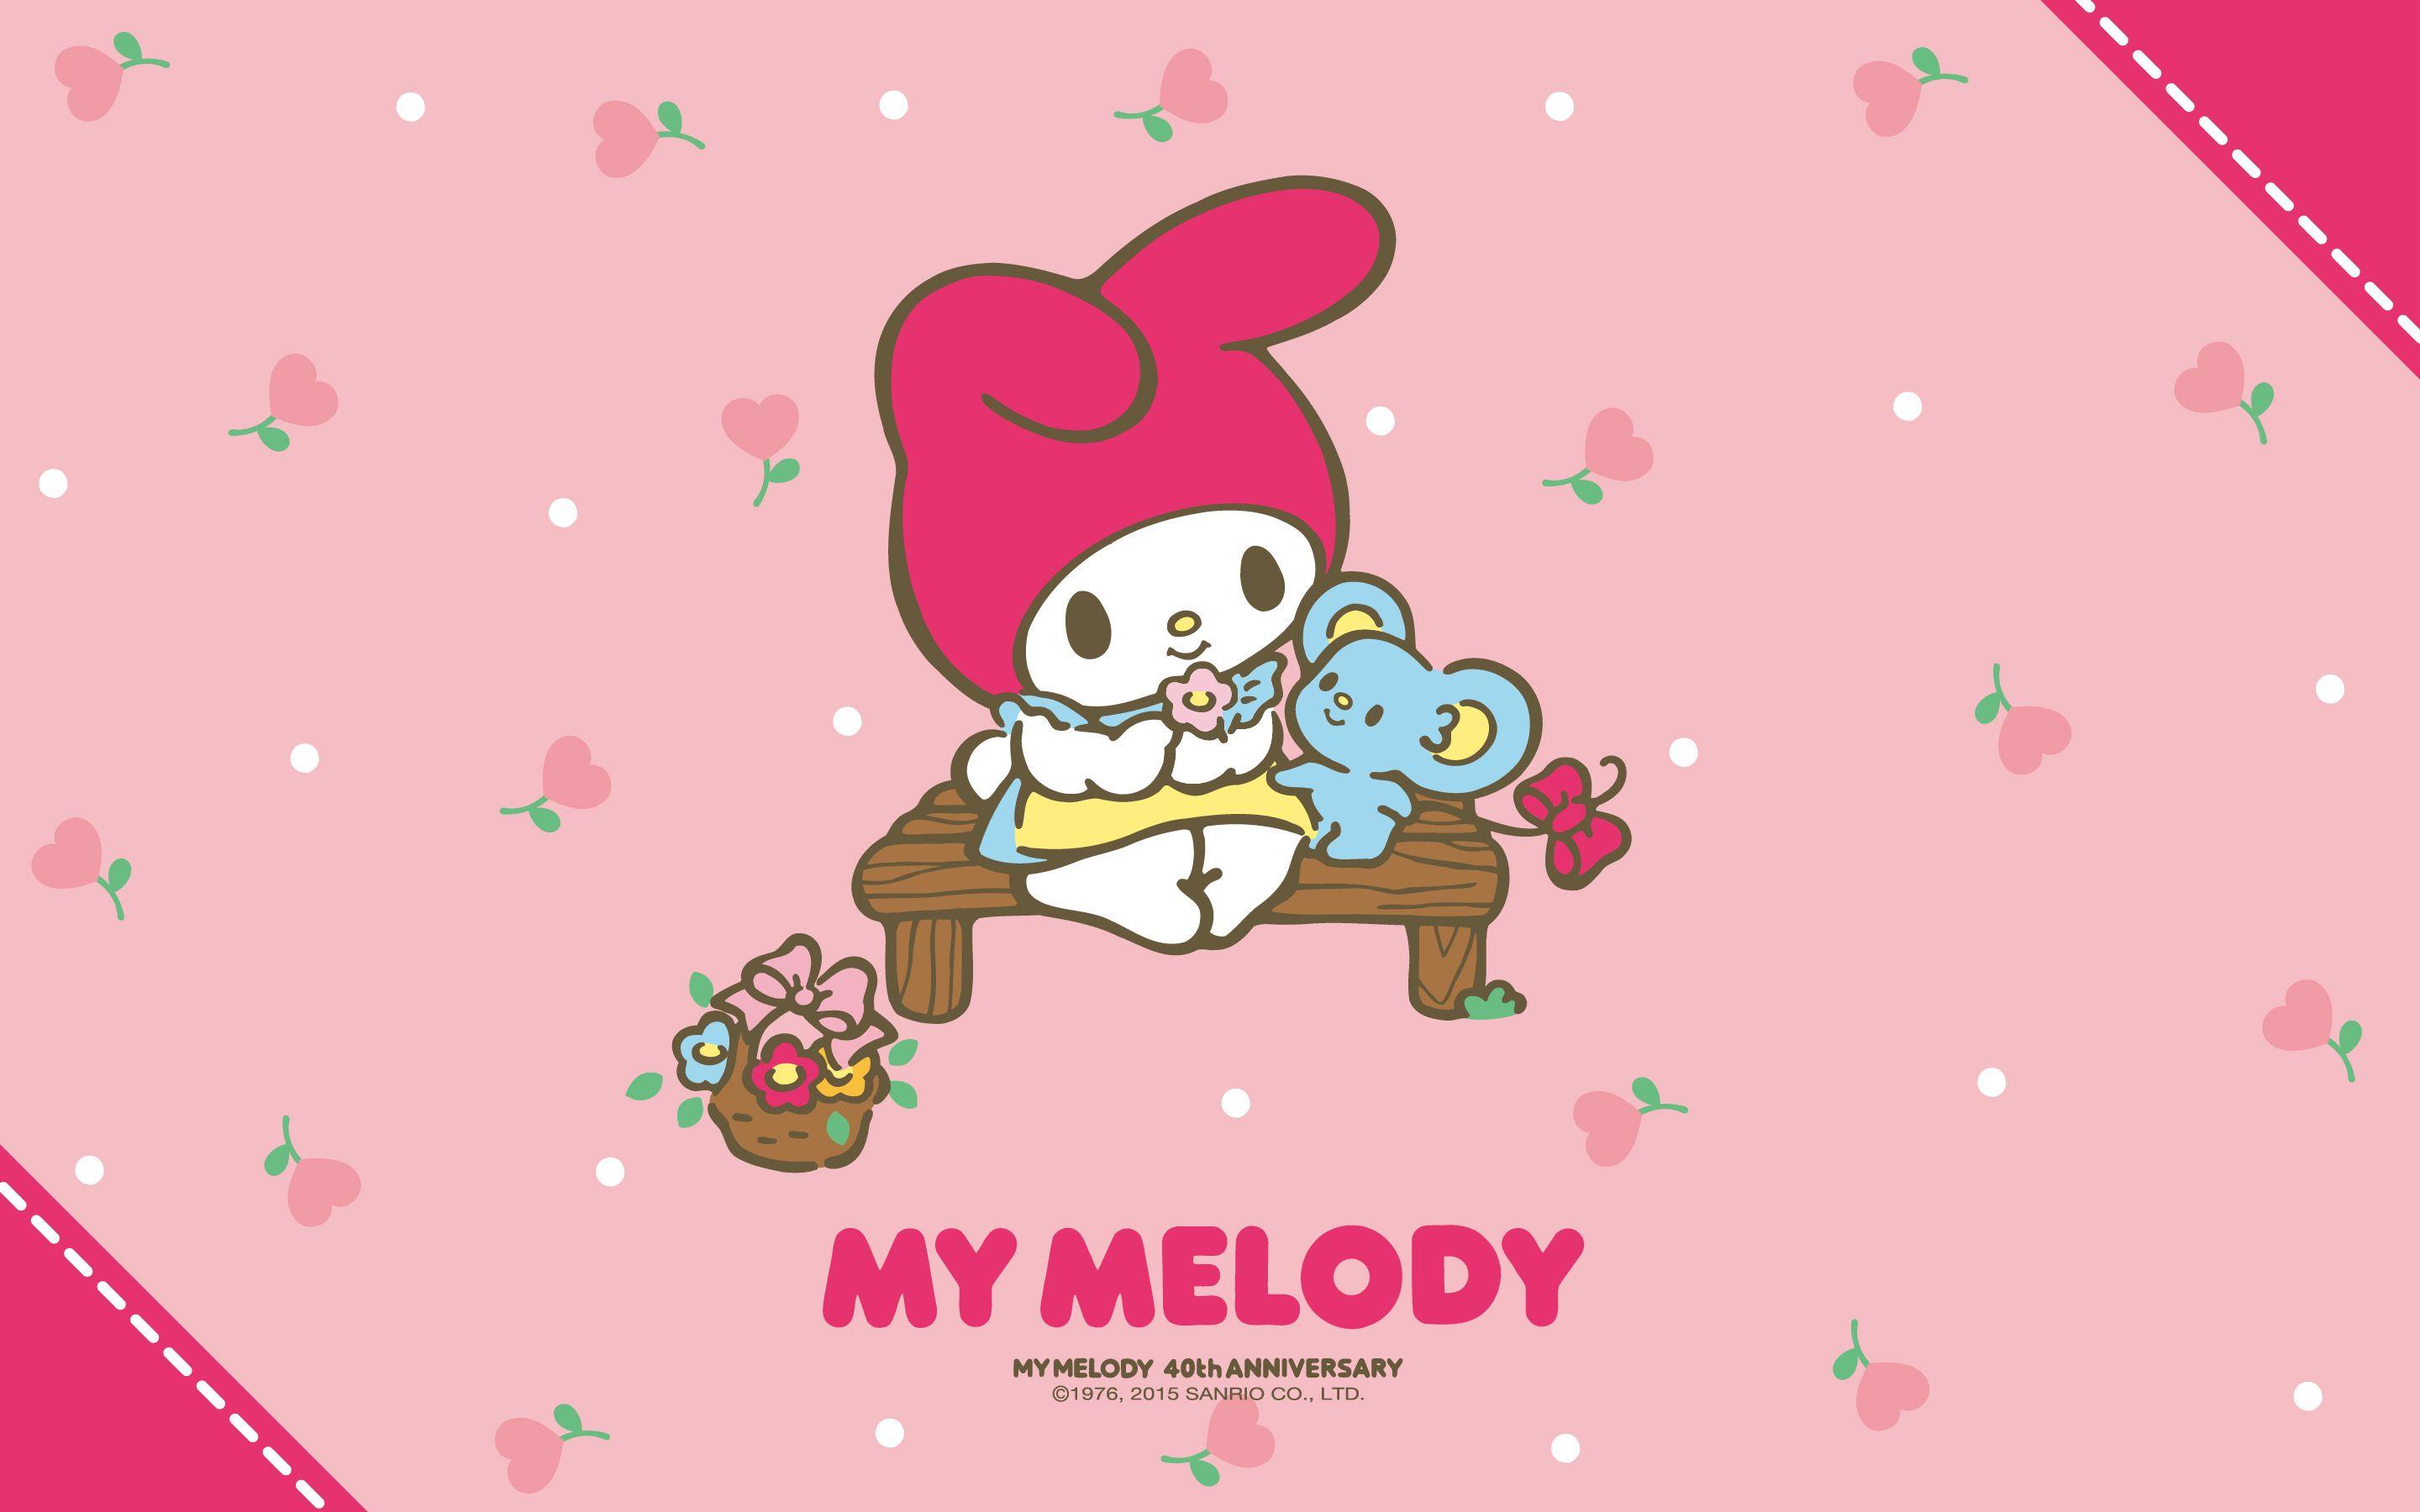 My Melody & Koala Pink Wallpaper Melody is sitting